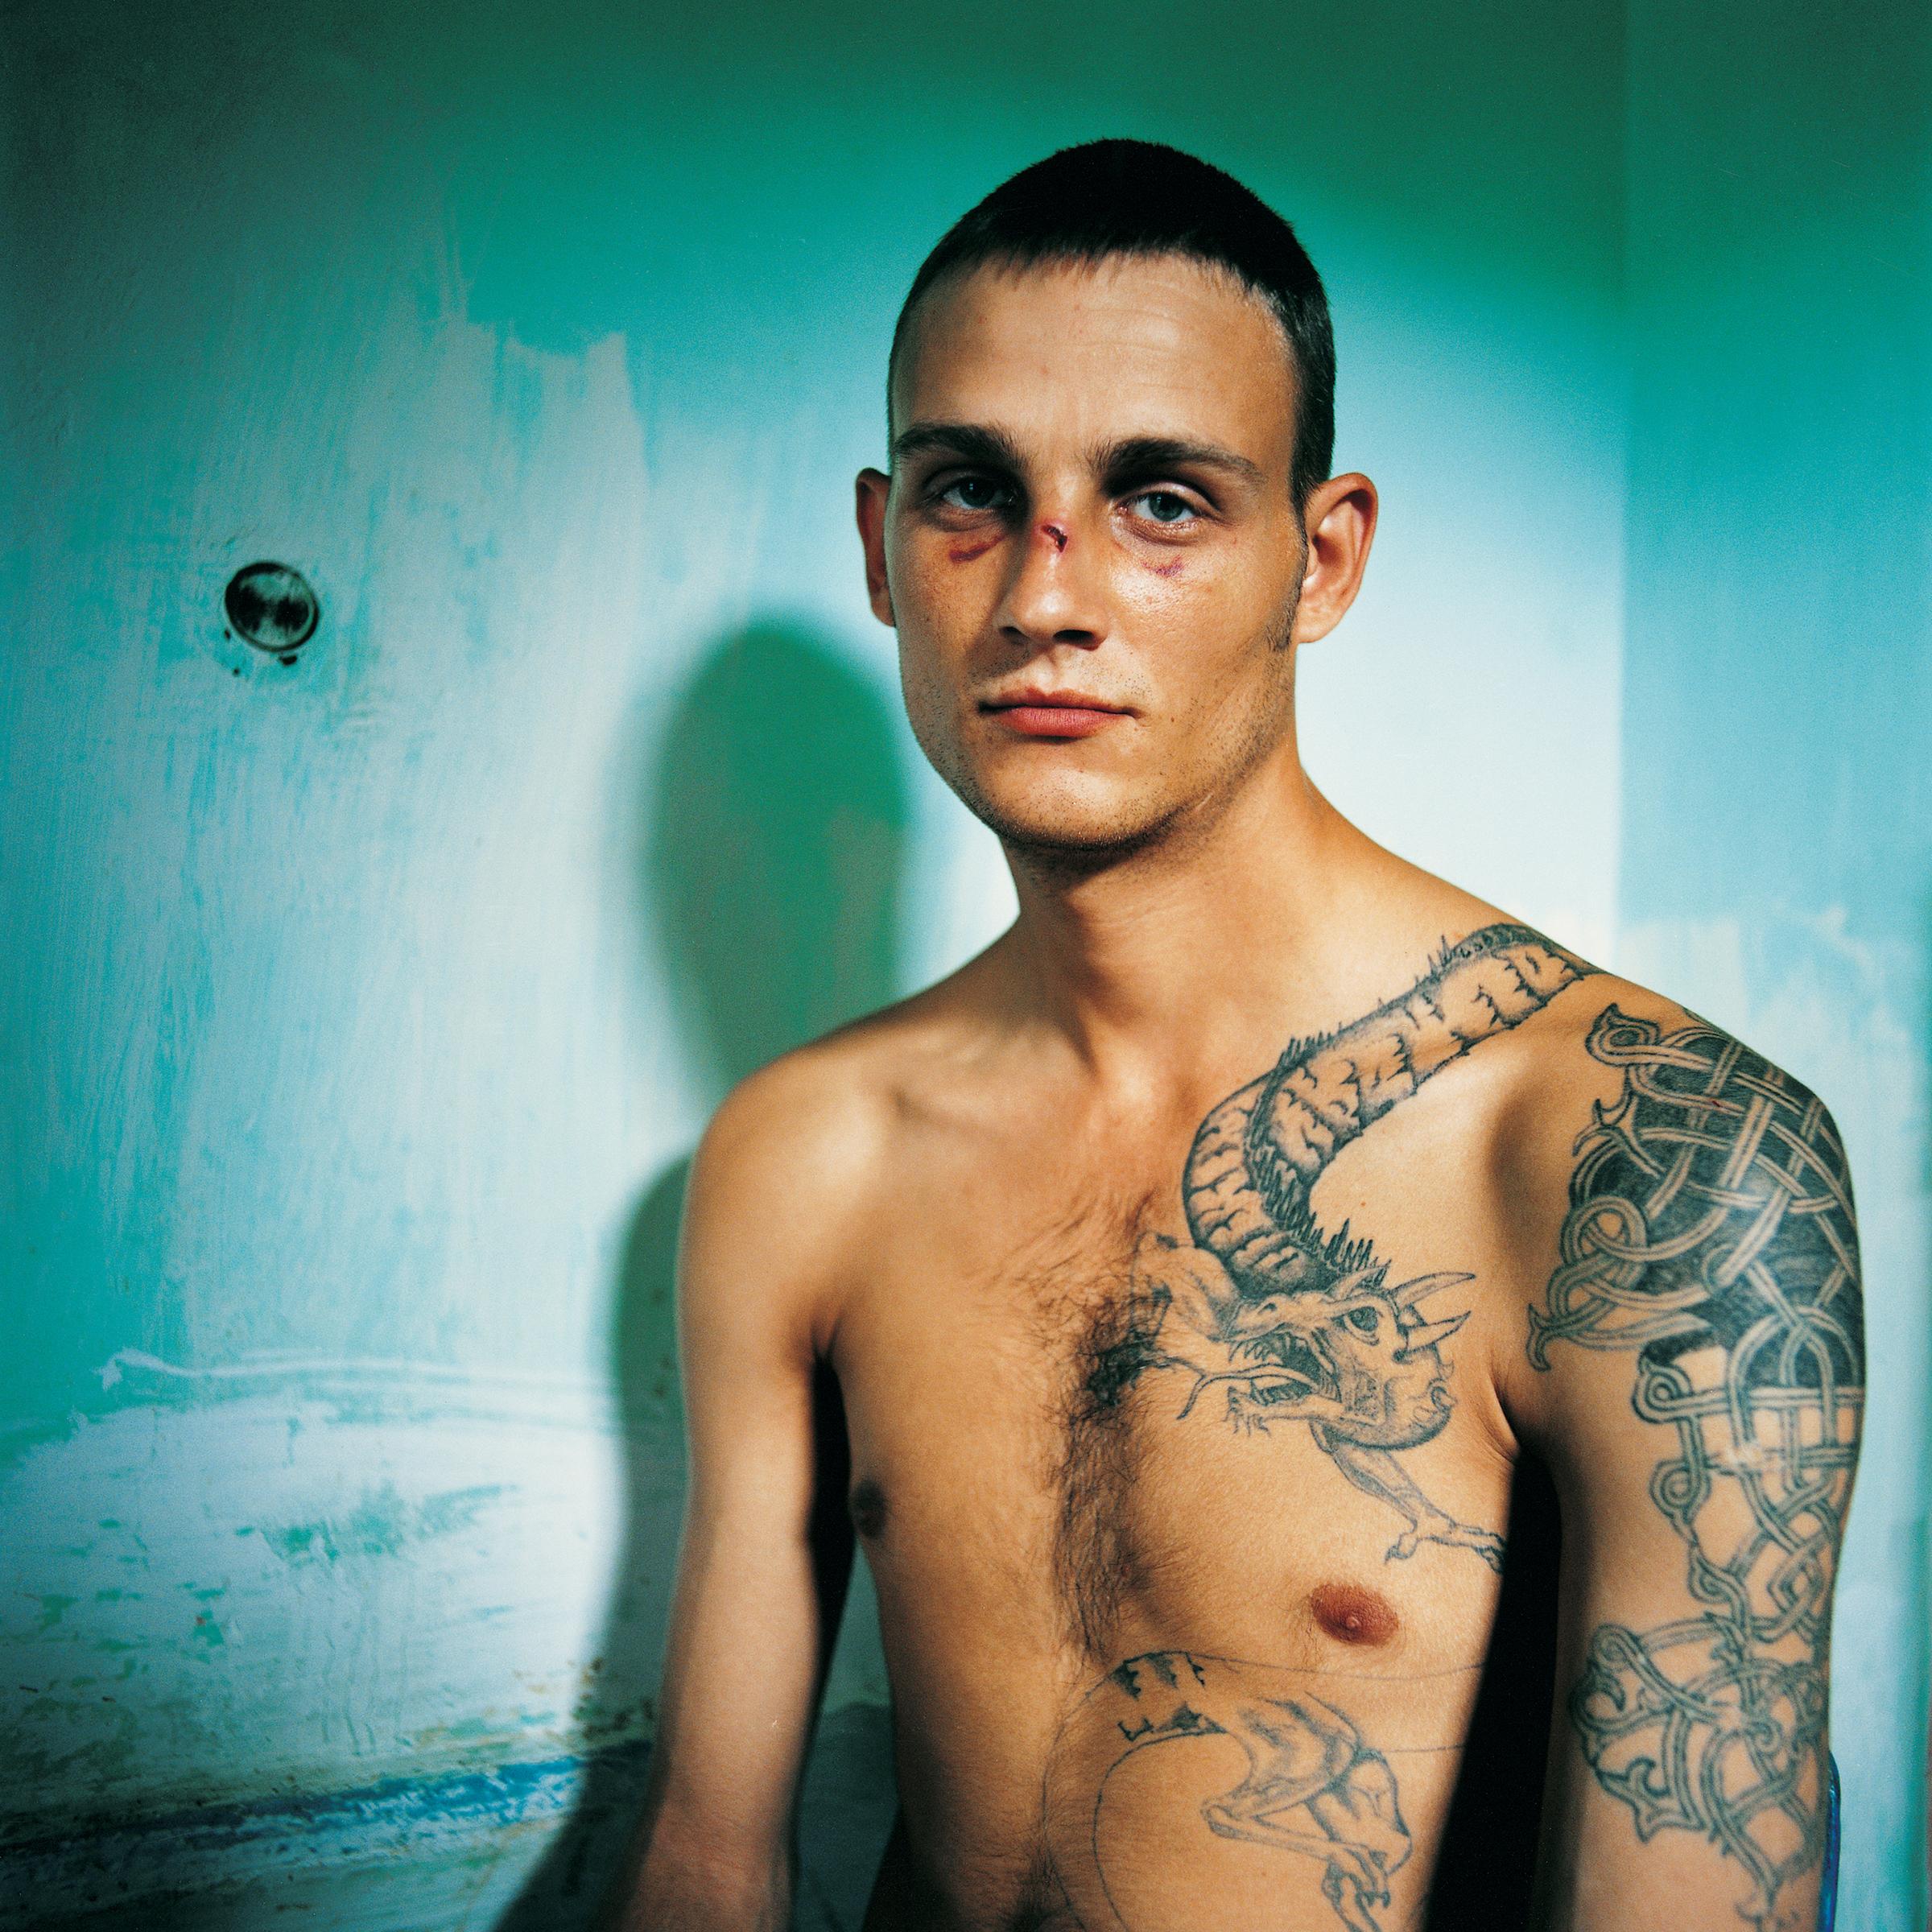 Michal Chelbin Portrait Photograph - Vania (Sentenced for Murder): Men’s Prison